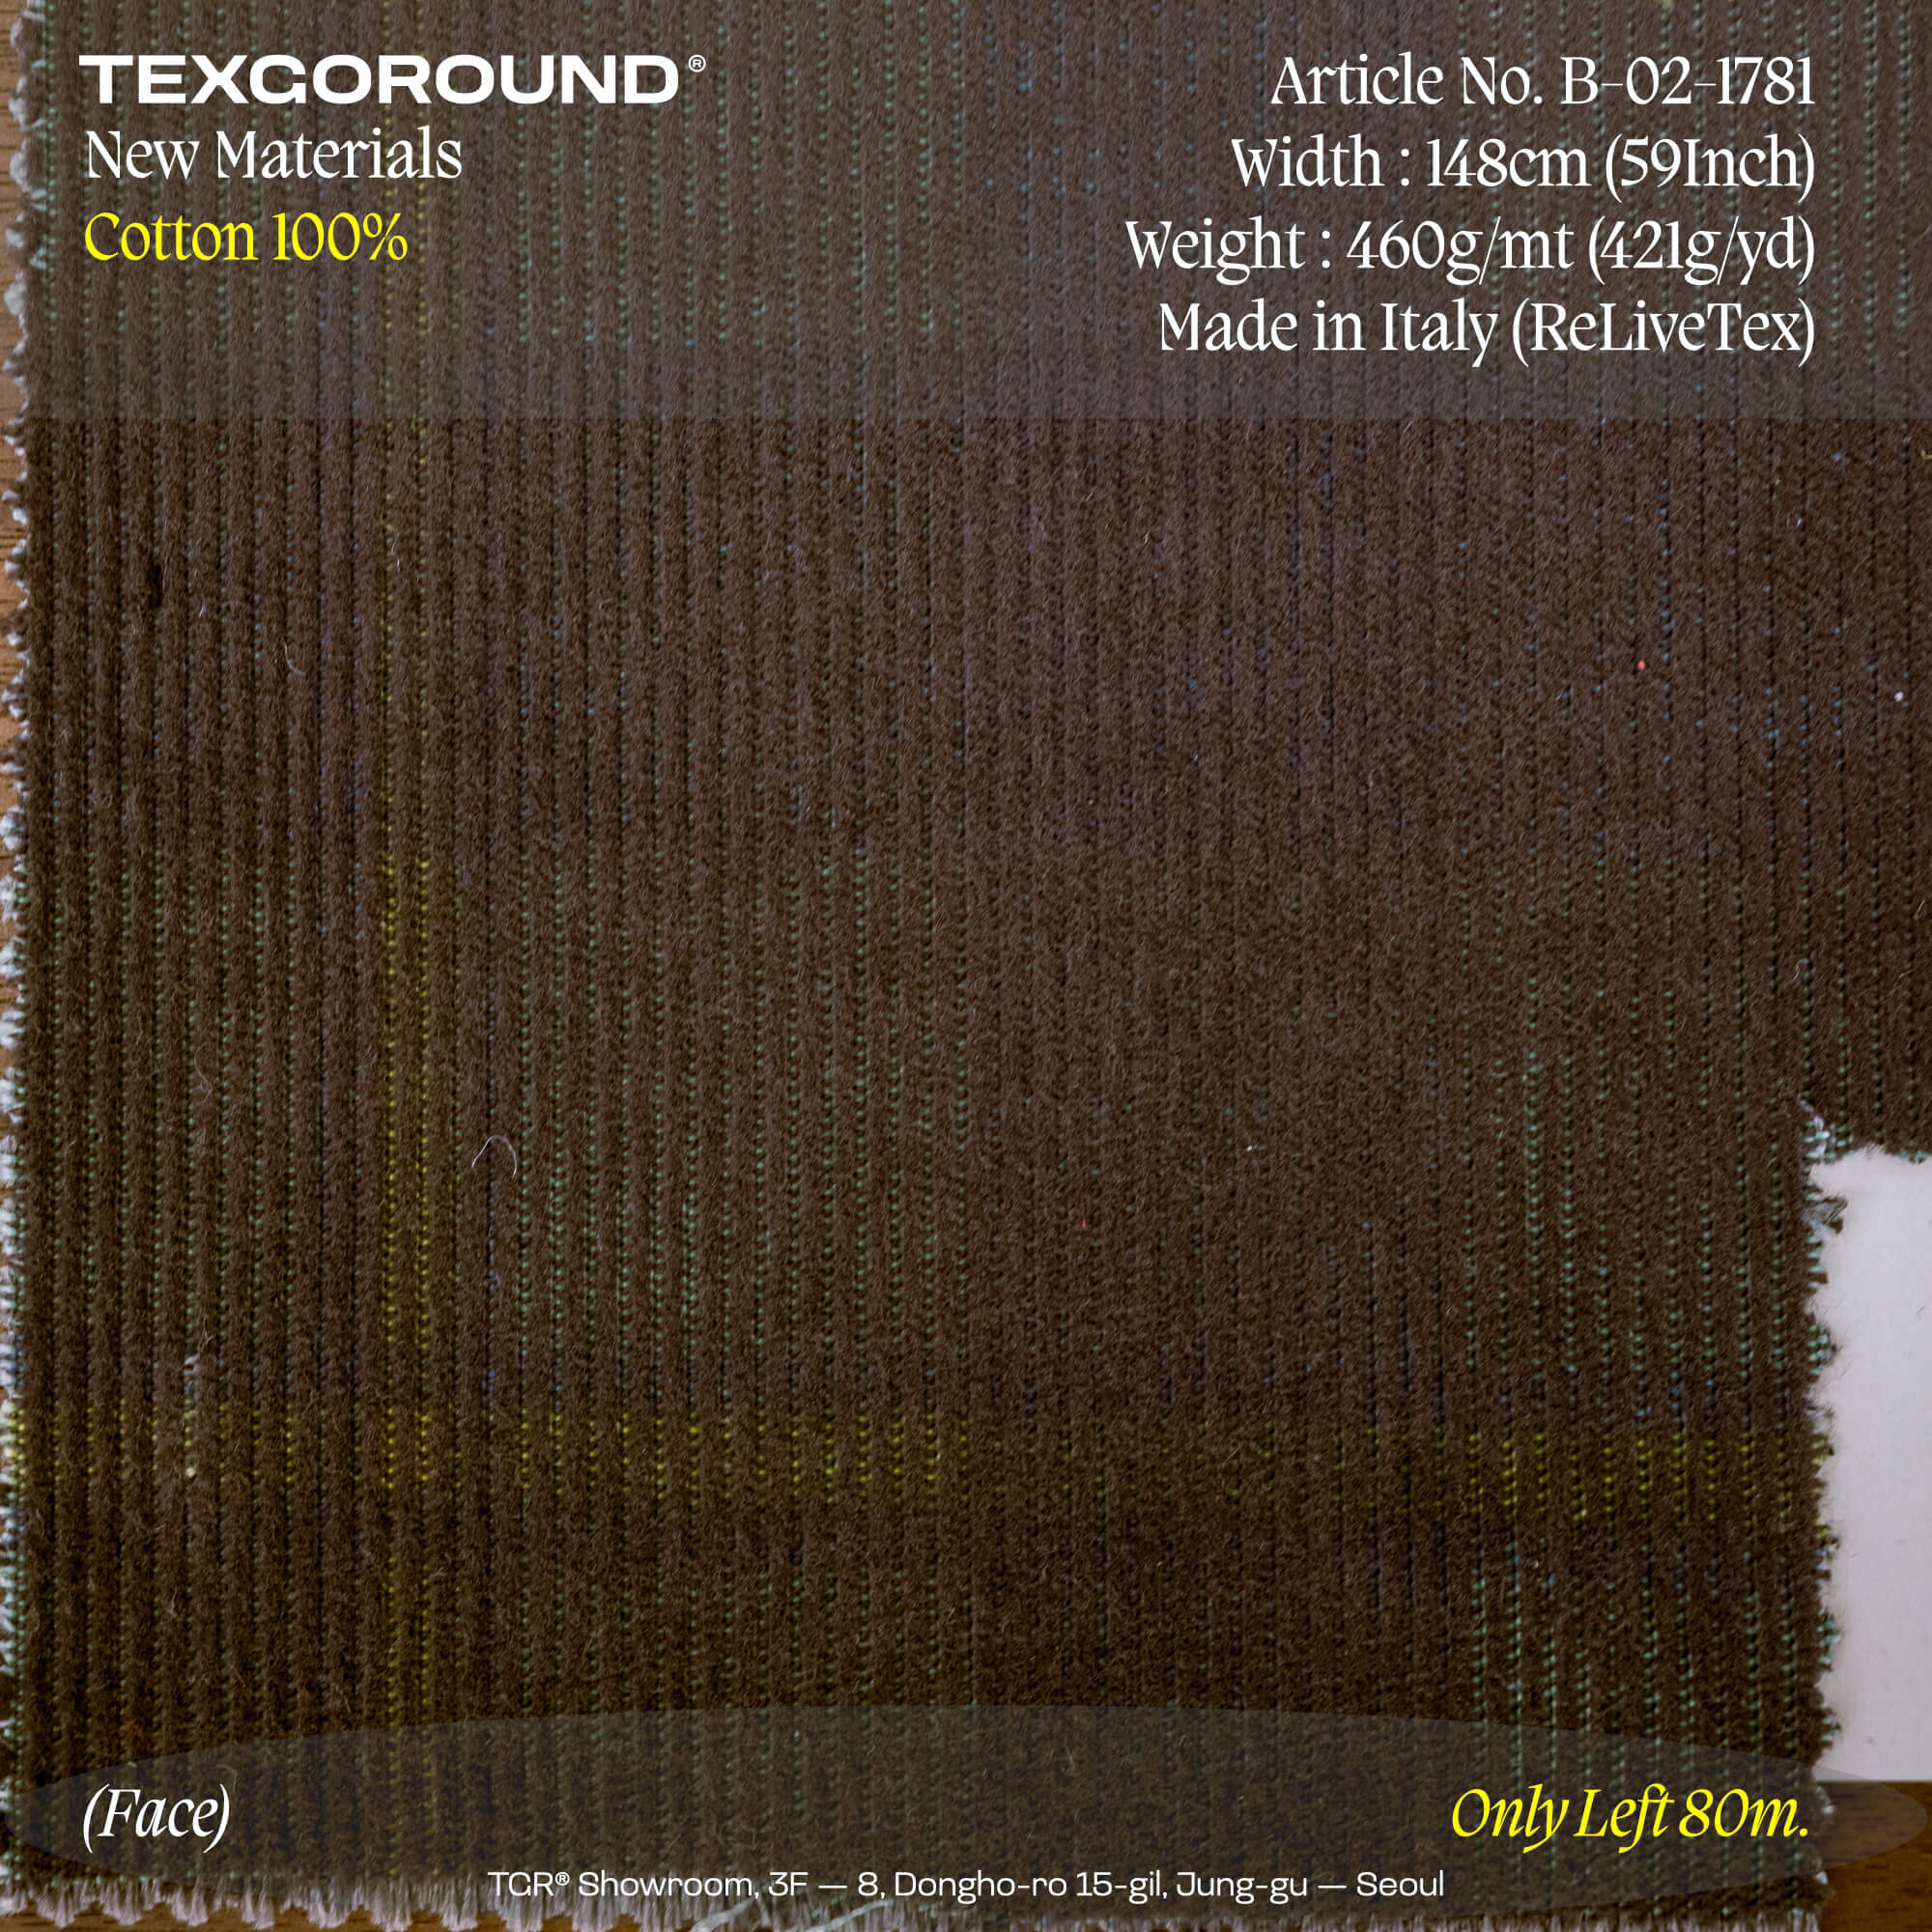 TEXGOROUND® New Materials (1) - Cotton 100%